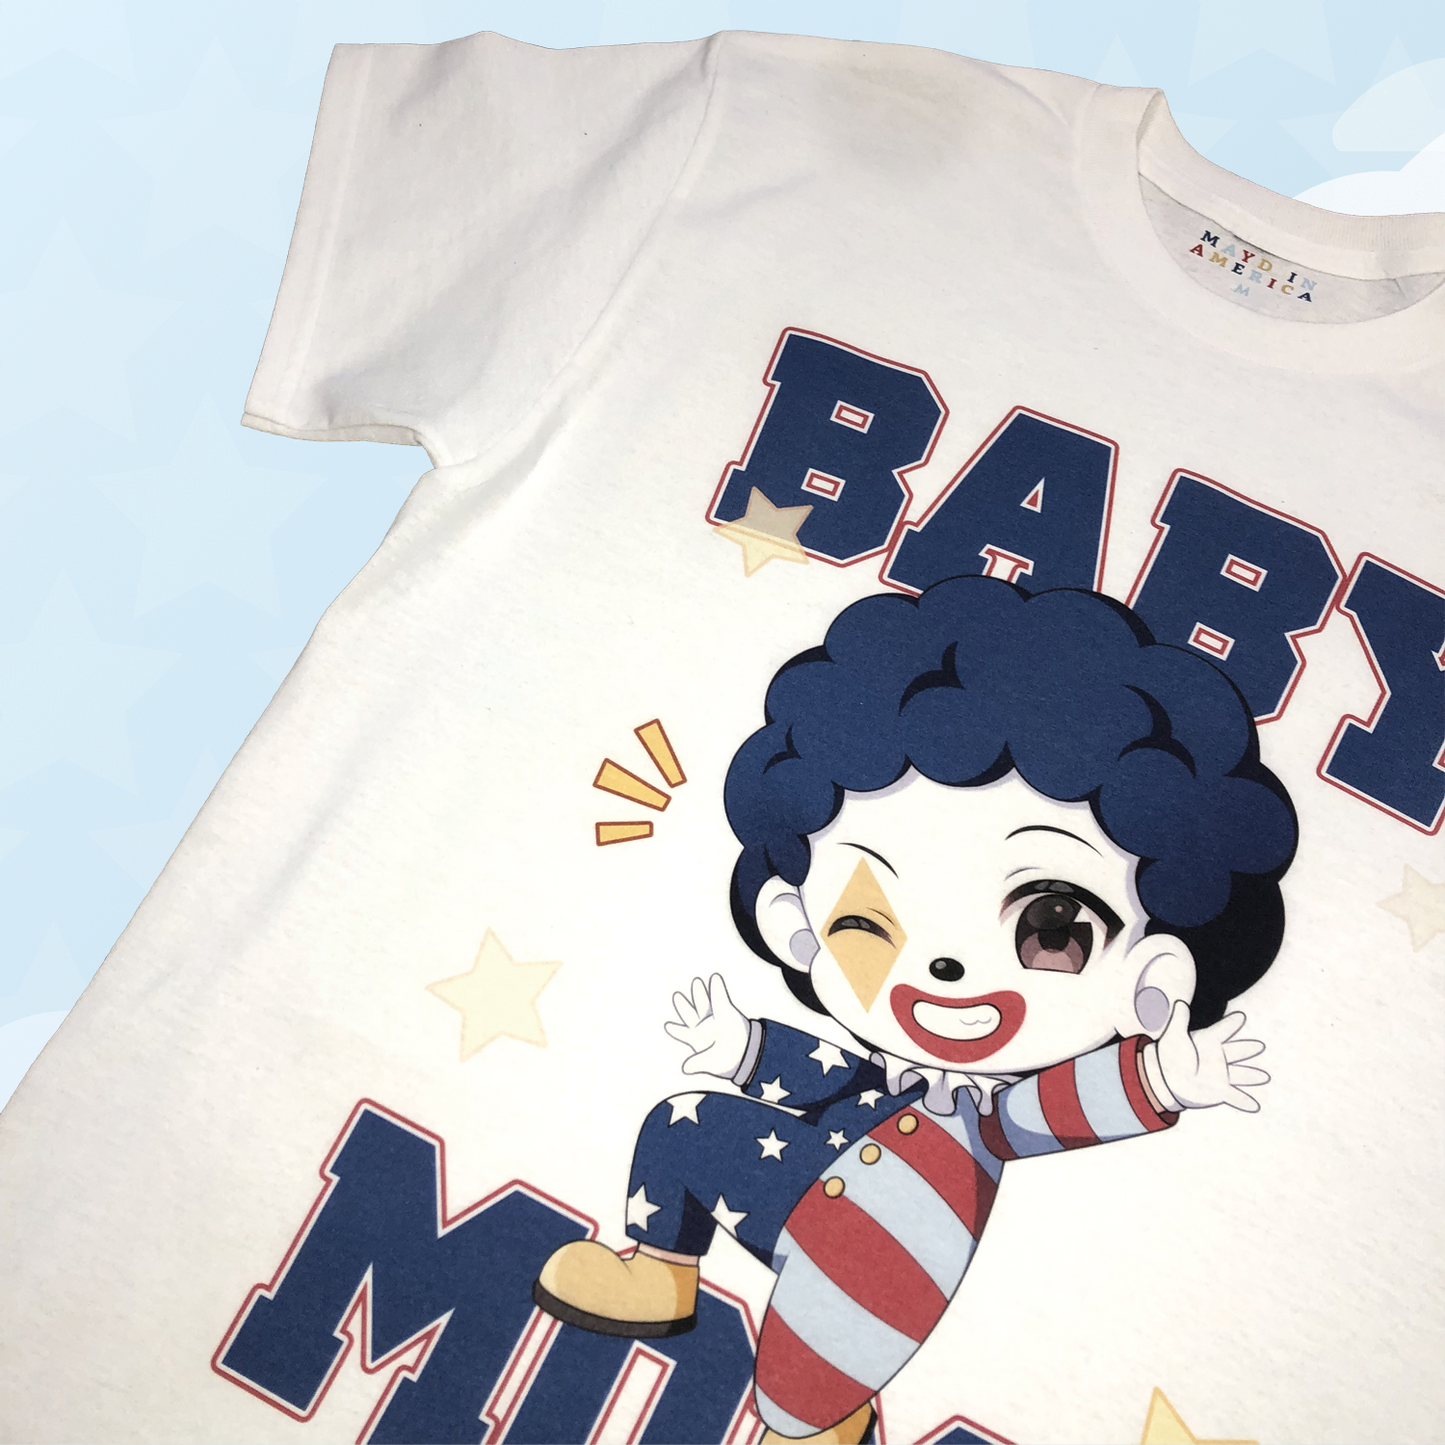 MAYD in America Baby Momo Tshirt